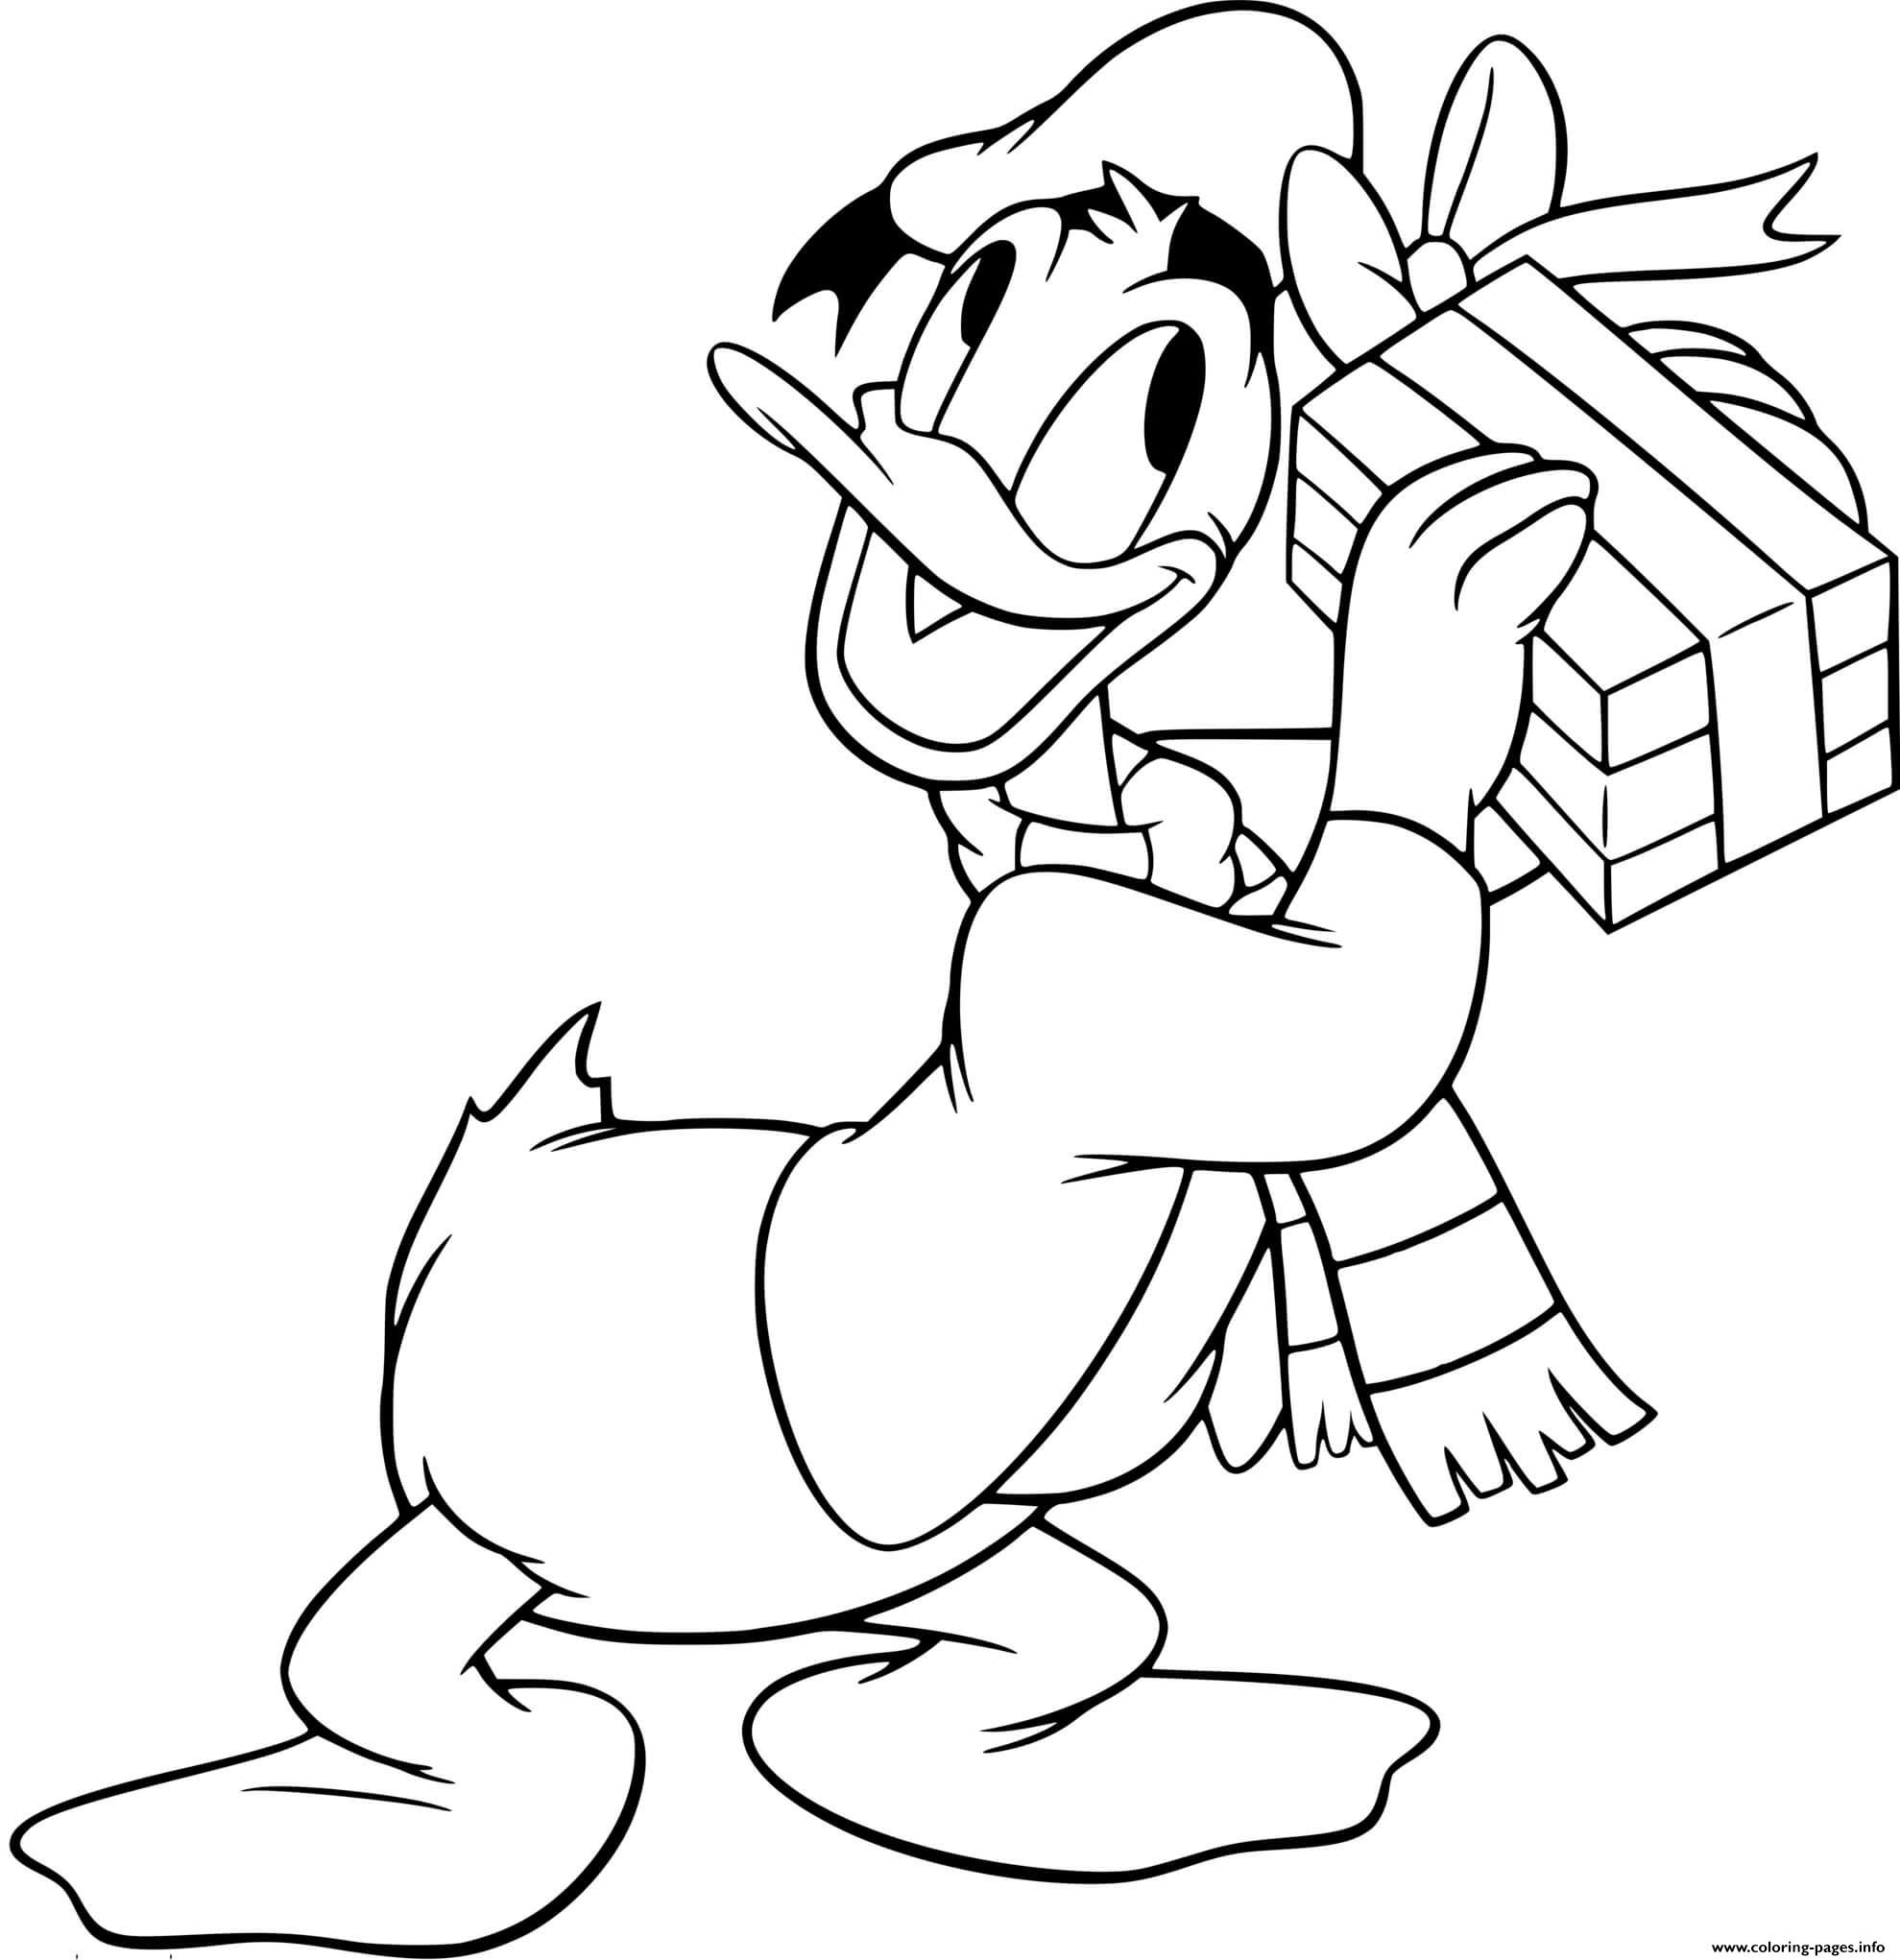 Donald Ducks Present coloring